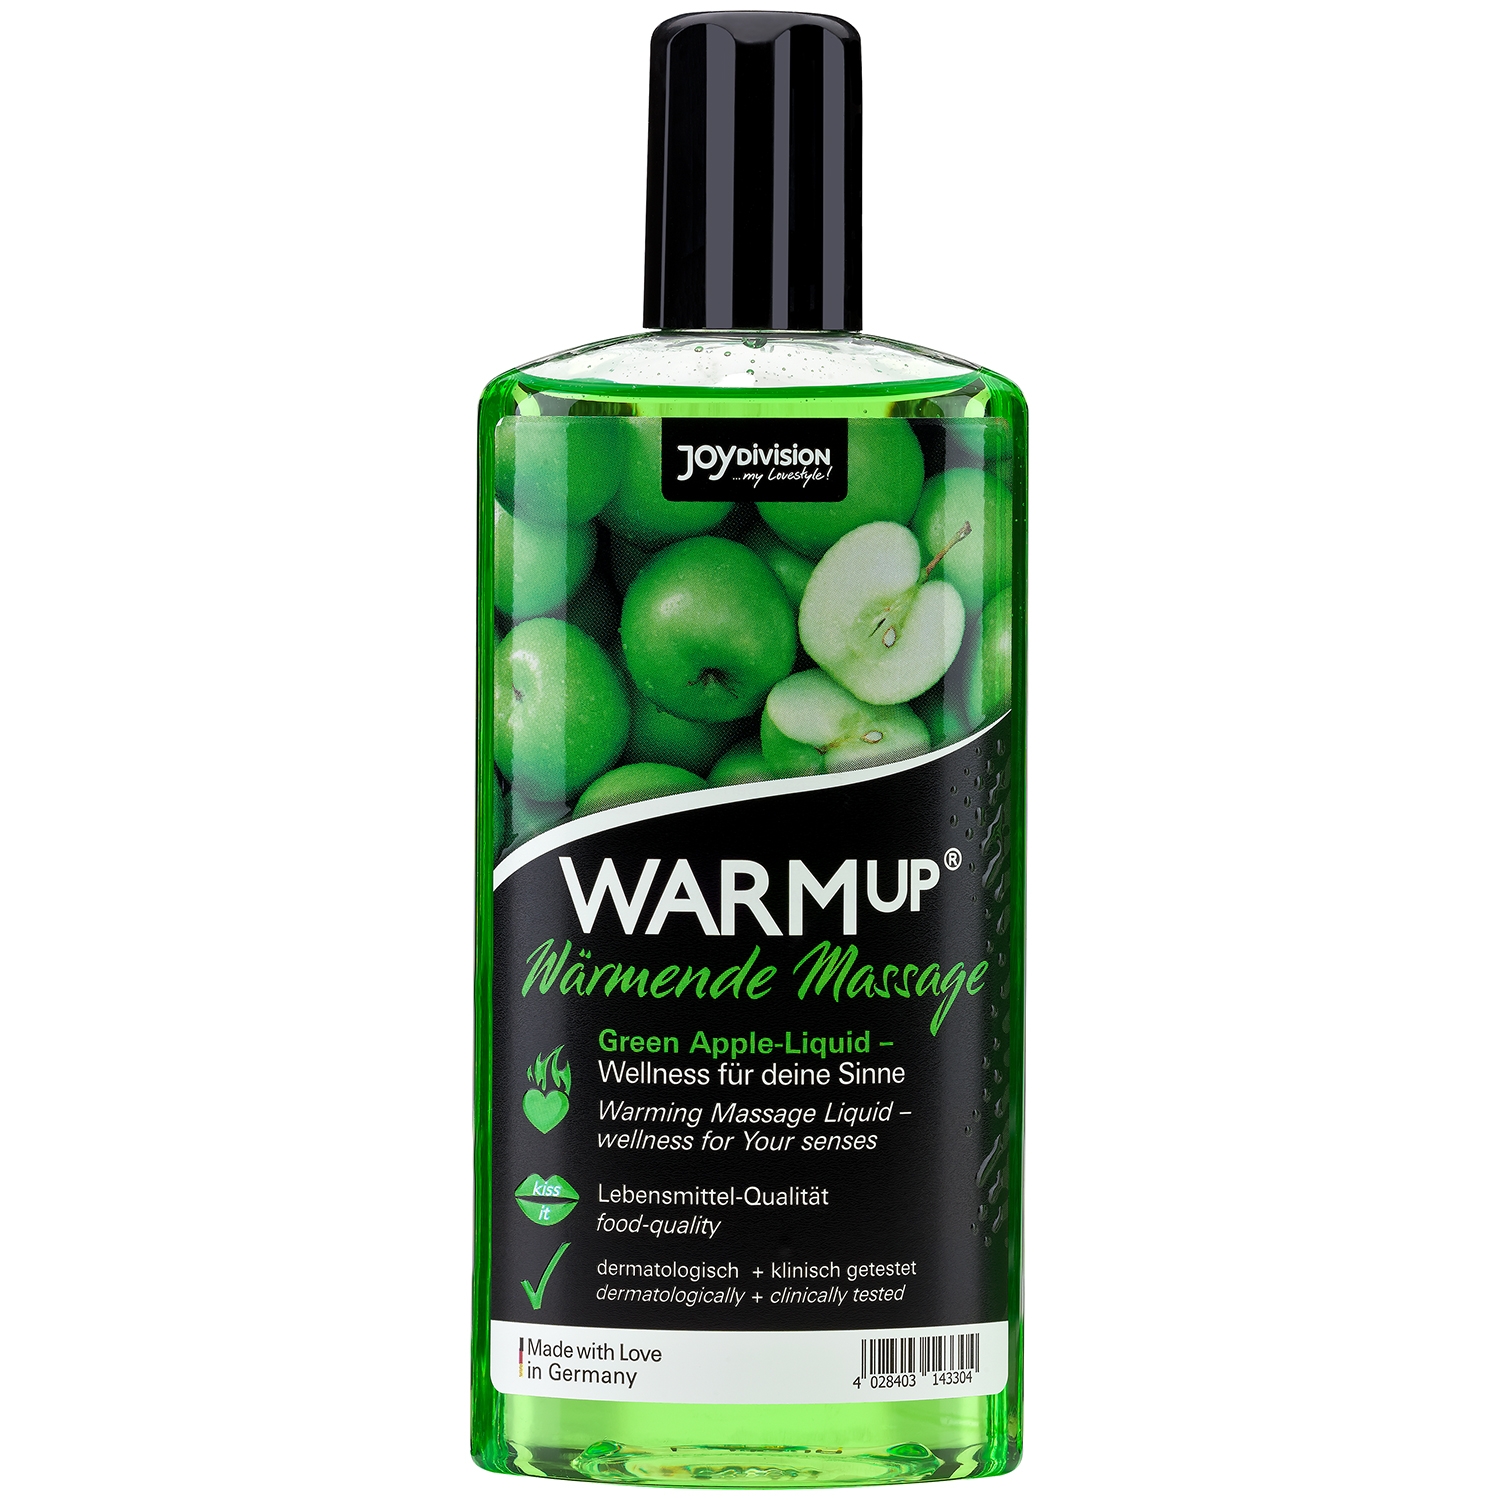 11: JoyDivision WARMup Varmende Massageolie med Smag 150 ml   - Green